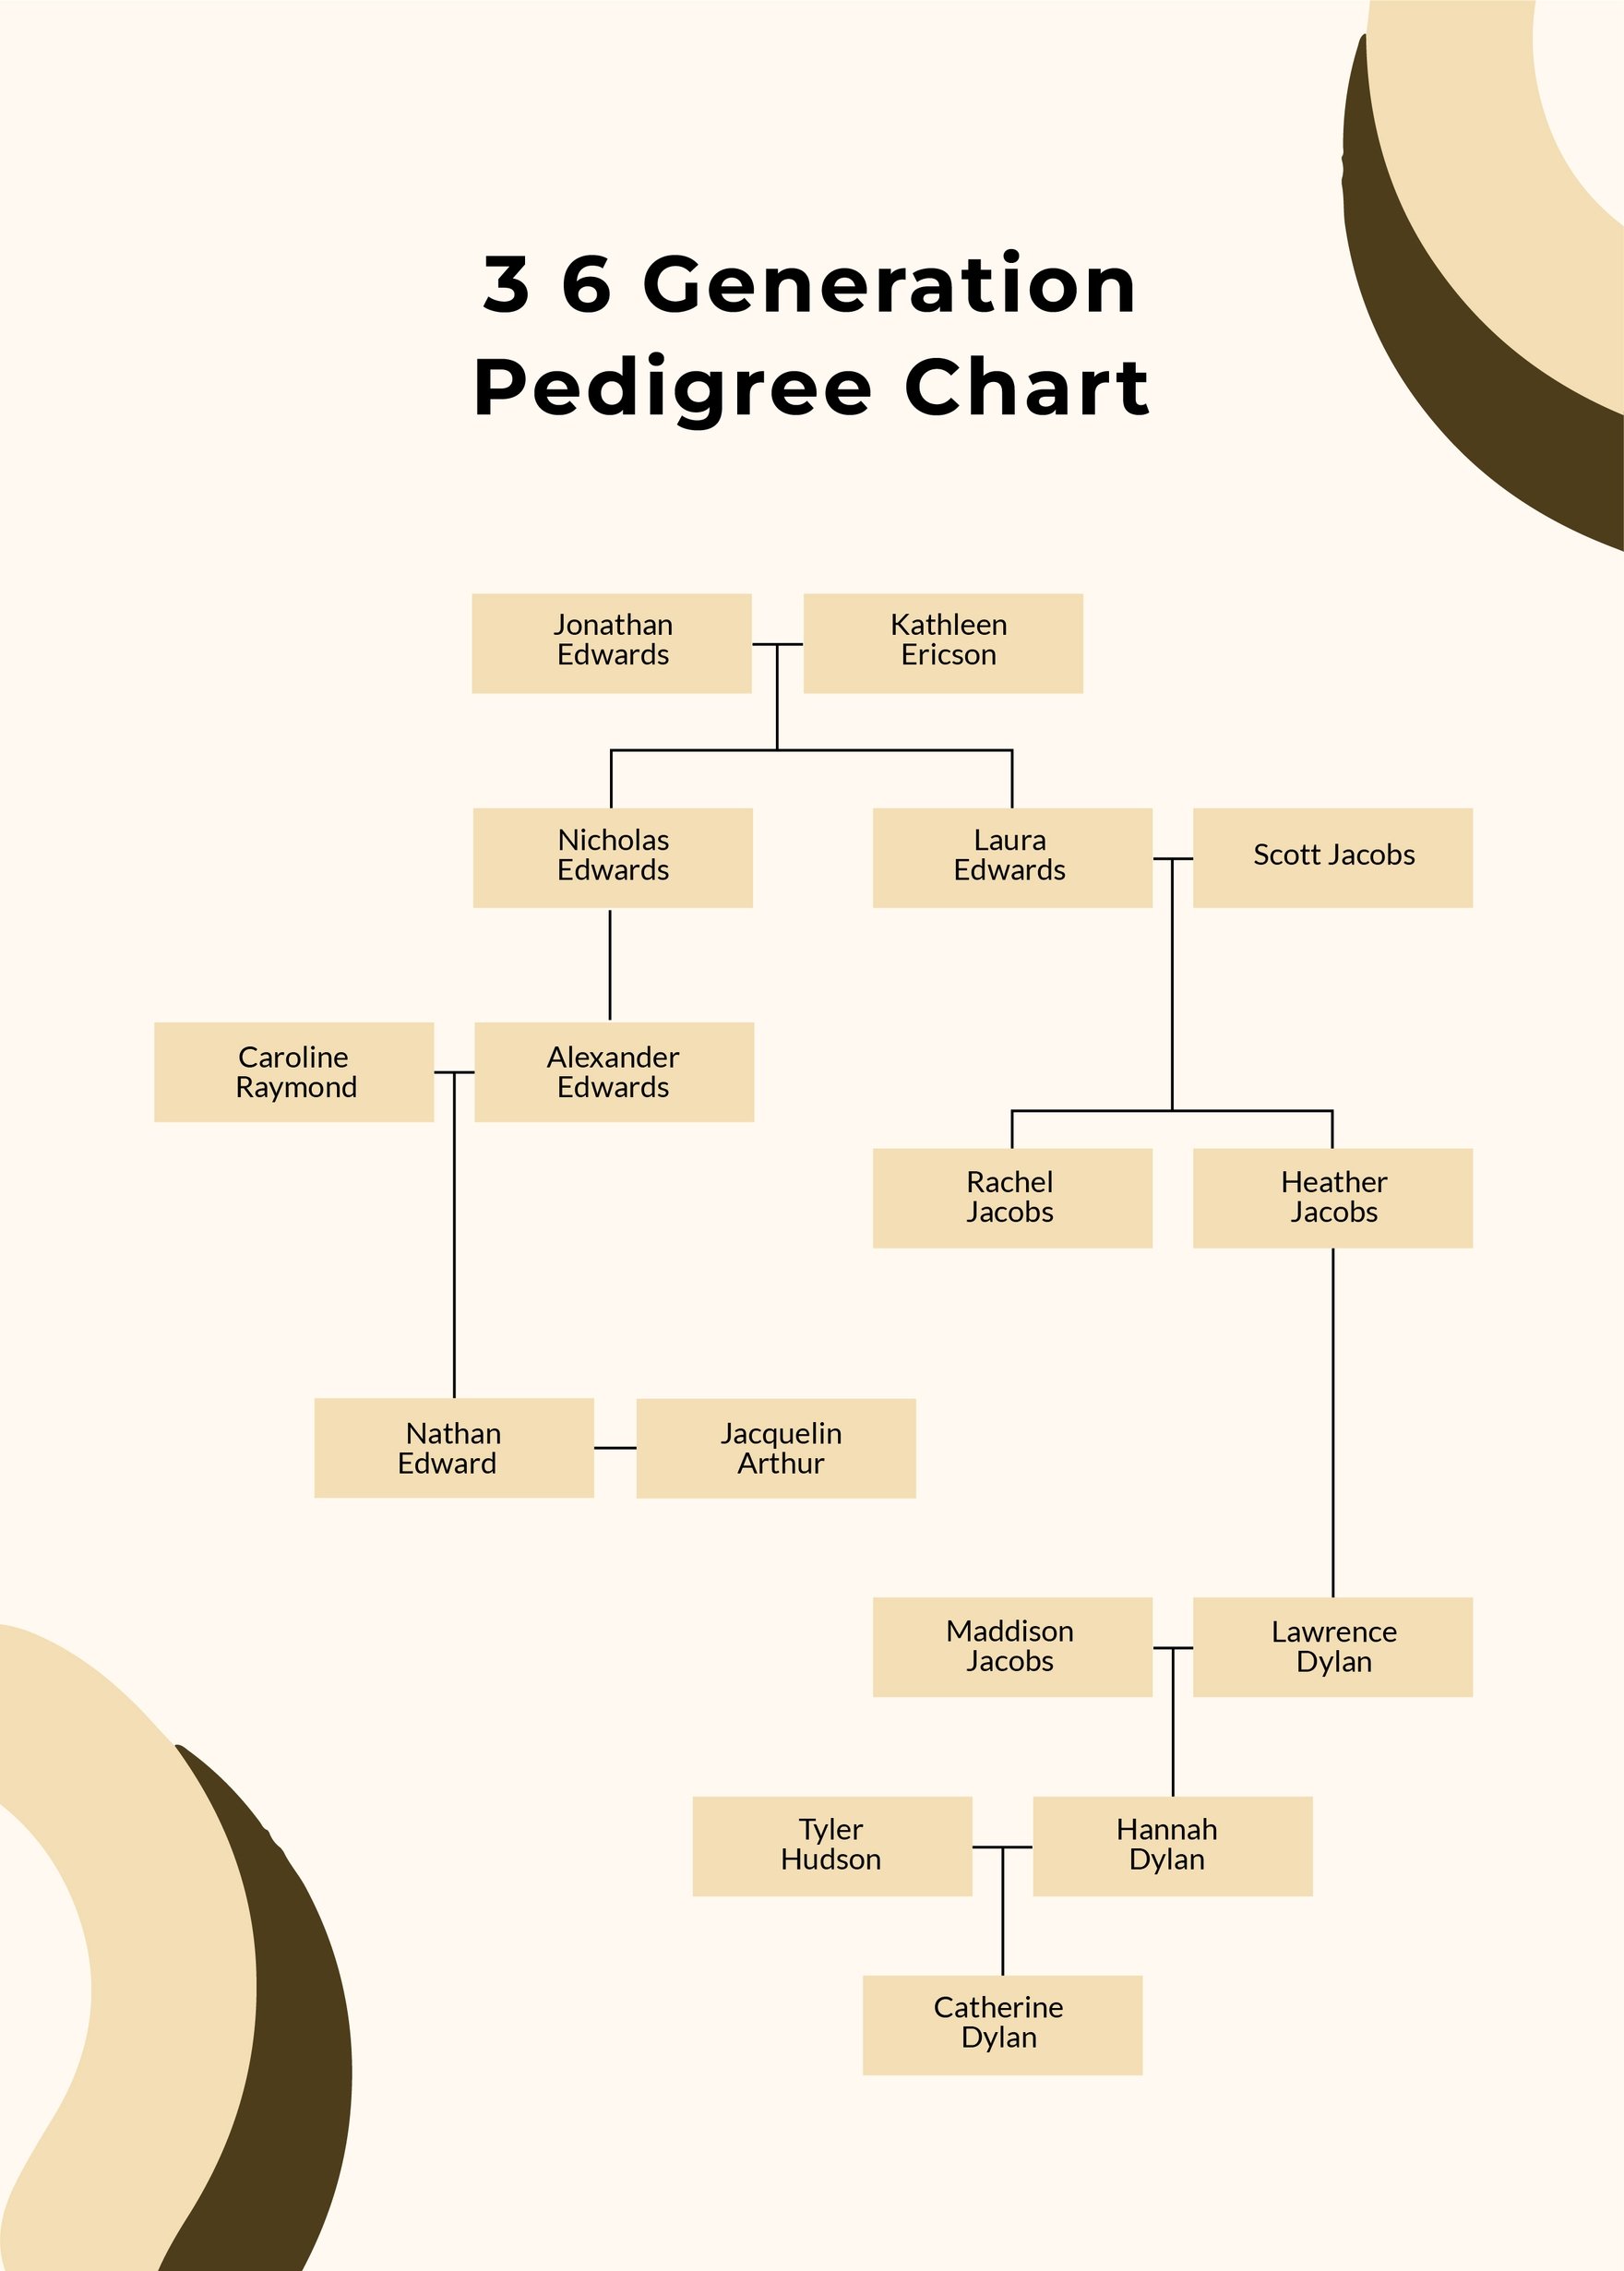 3 6 Generation Pedigree Chart